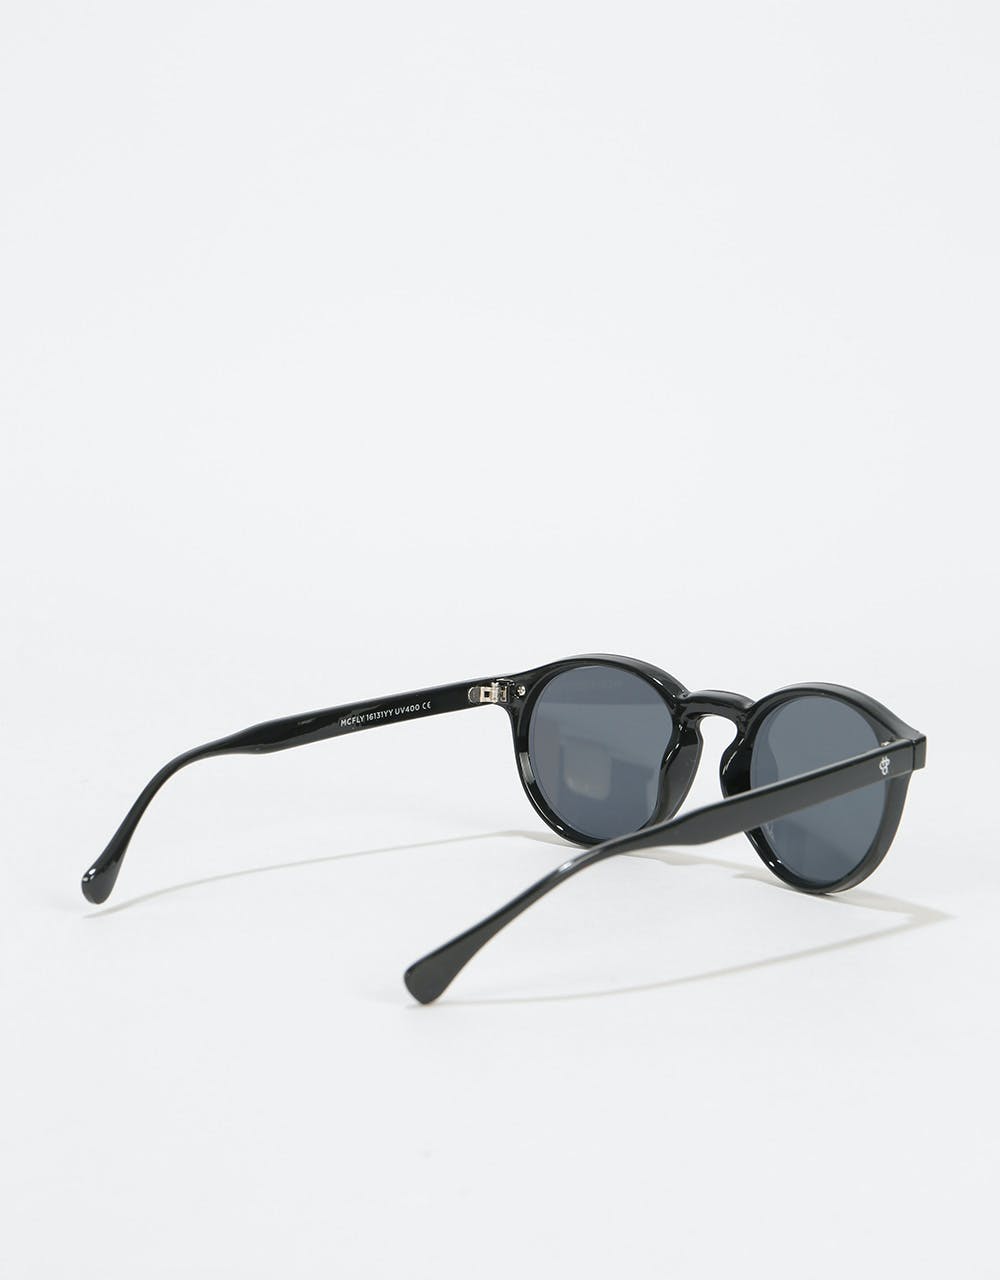 CHPO Mcfly Sunglasses - Black/Black